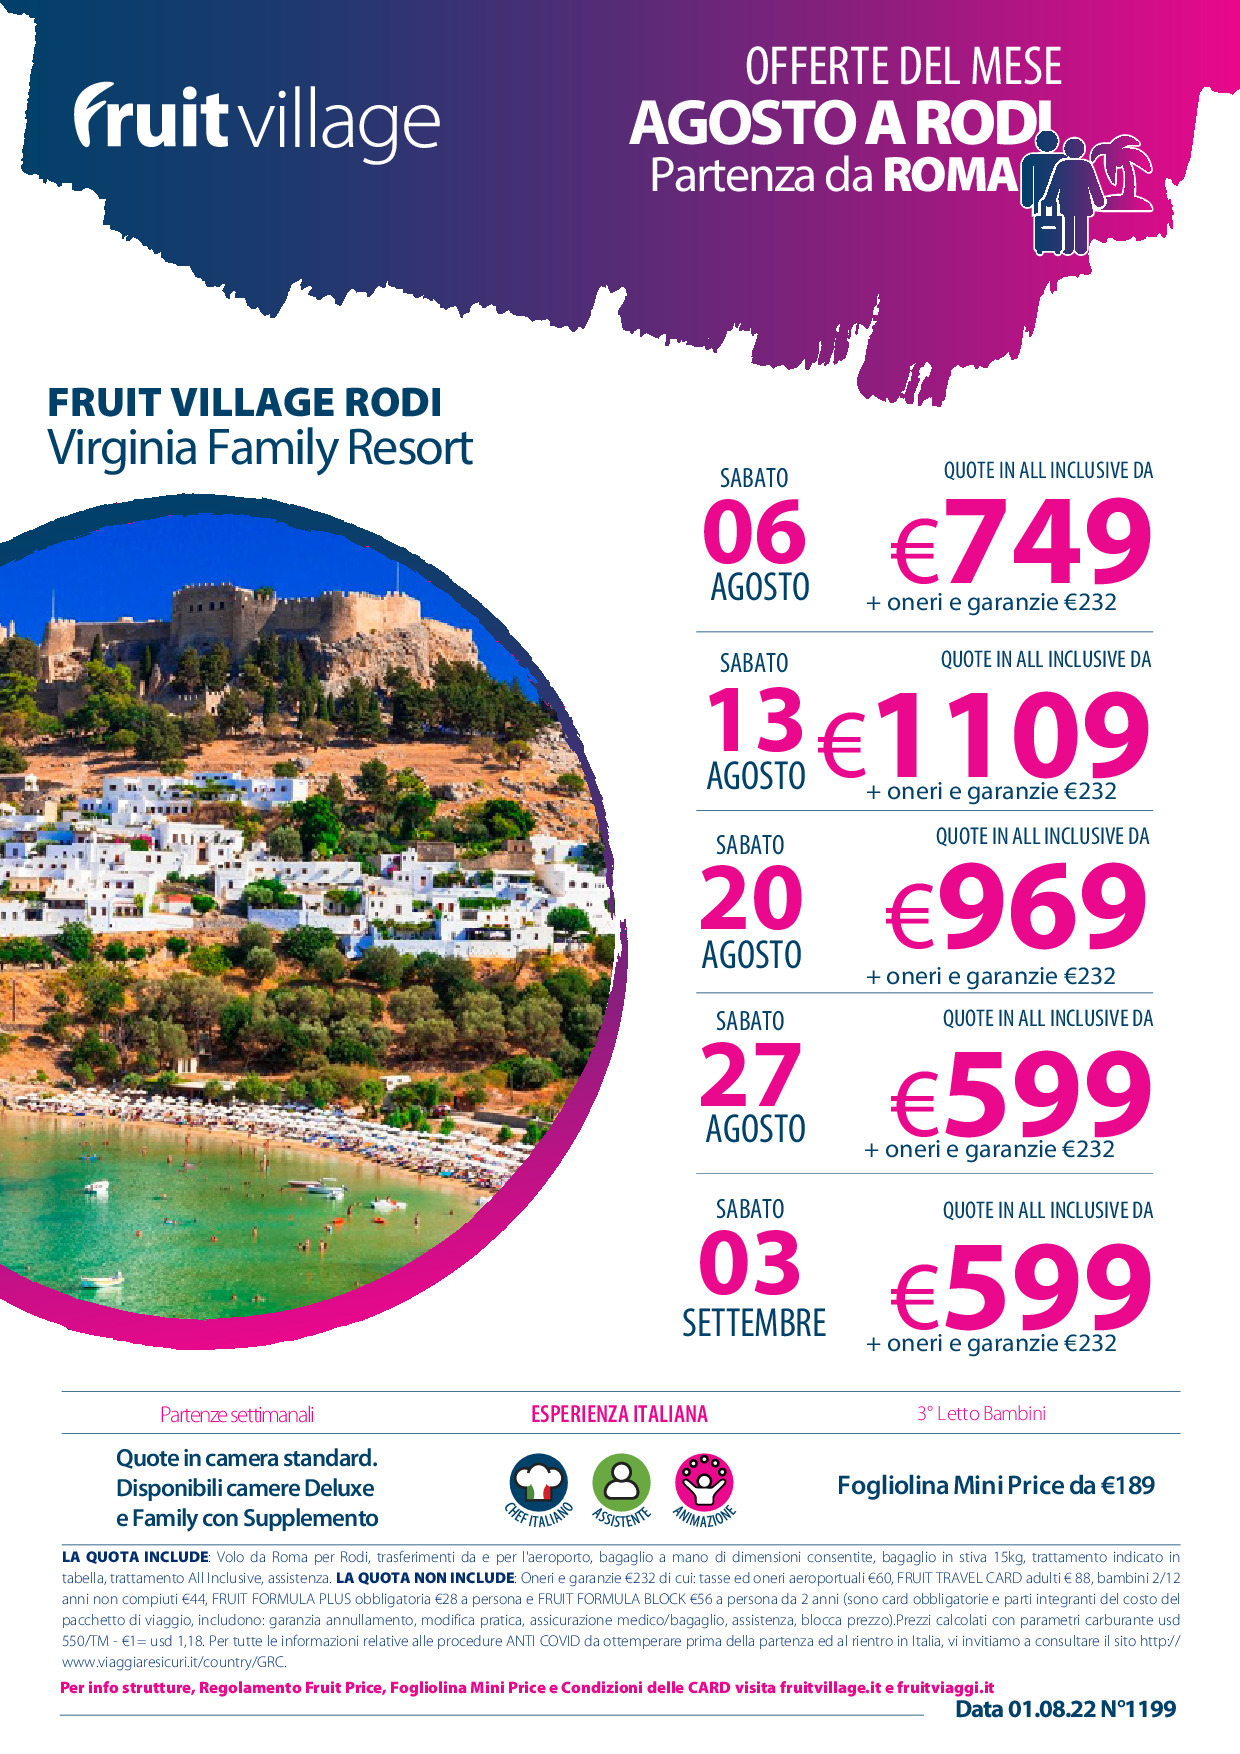 FRUIT VILLAGE Rodi Virginia Family Resort 4* - Volo da Roma